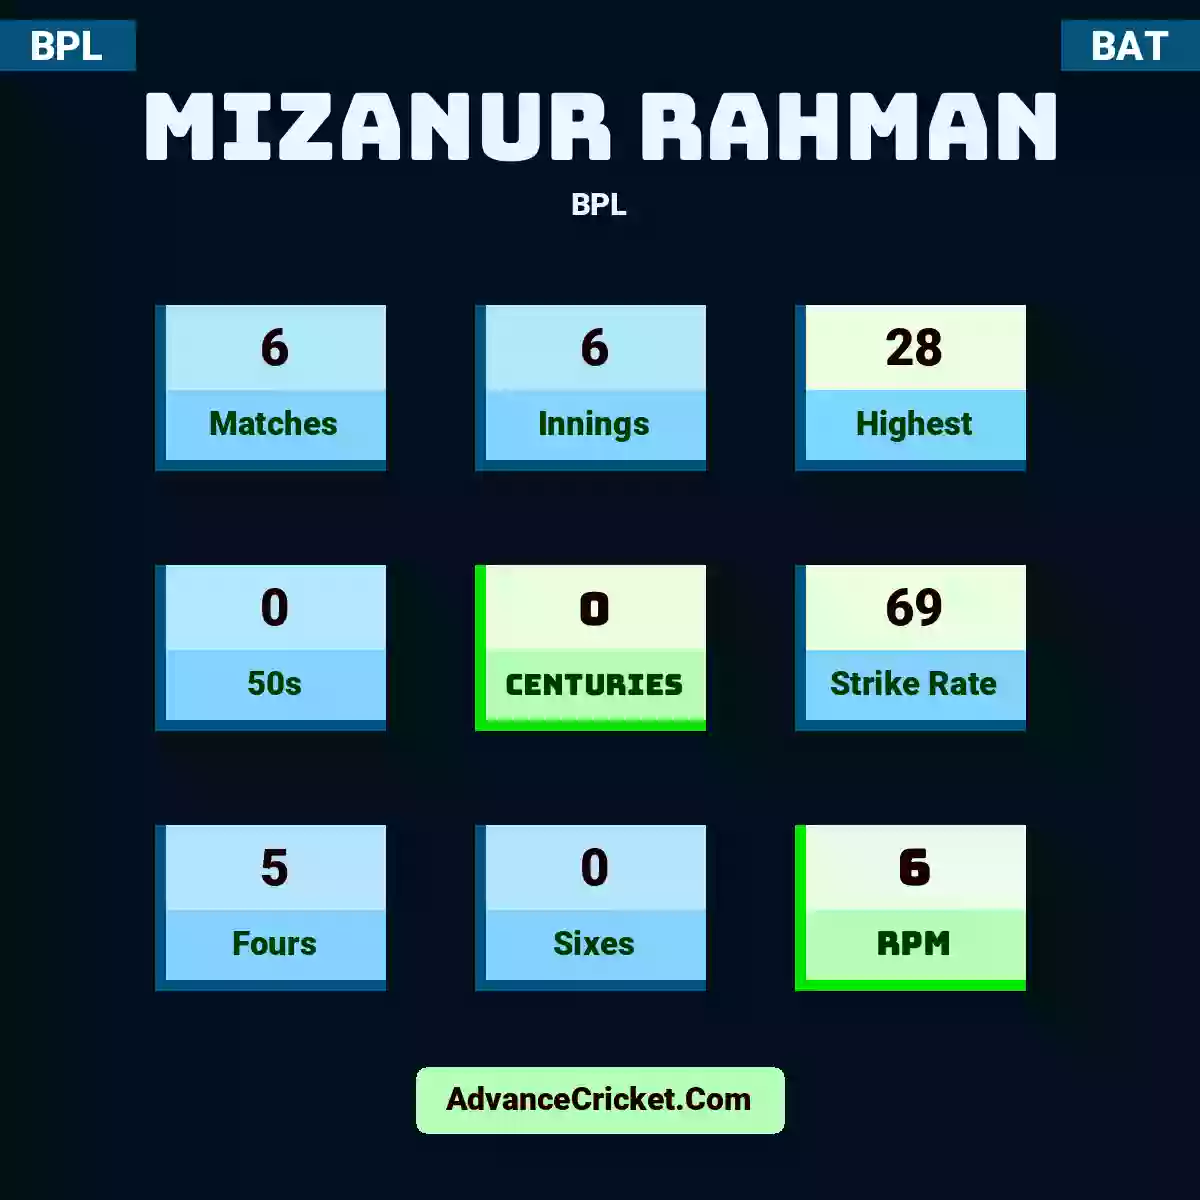 Mizanur Rahman BPL , Mizanur Rahman played 6 matches, scored 28 runs as highest, 0 half-centuries, and 0 centuries, with a strike rate of 69. M.Rahman hit 5 fours and 0 sixes, with an RPM of 6.